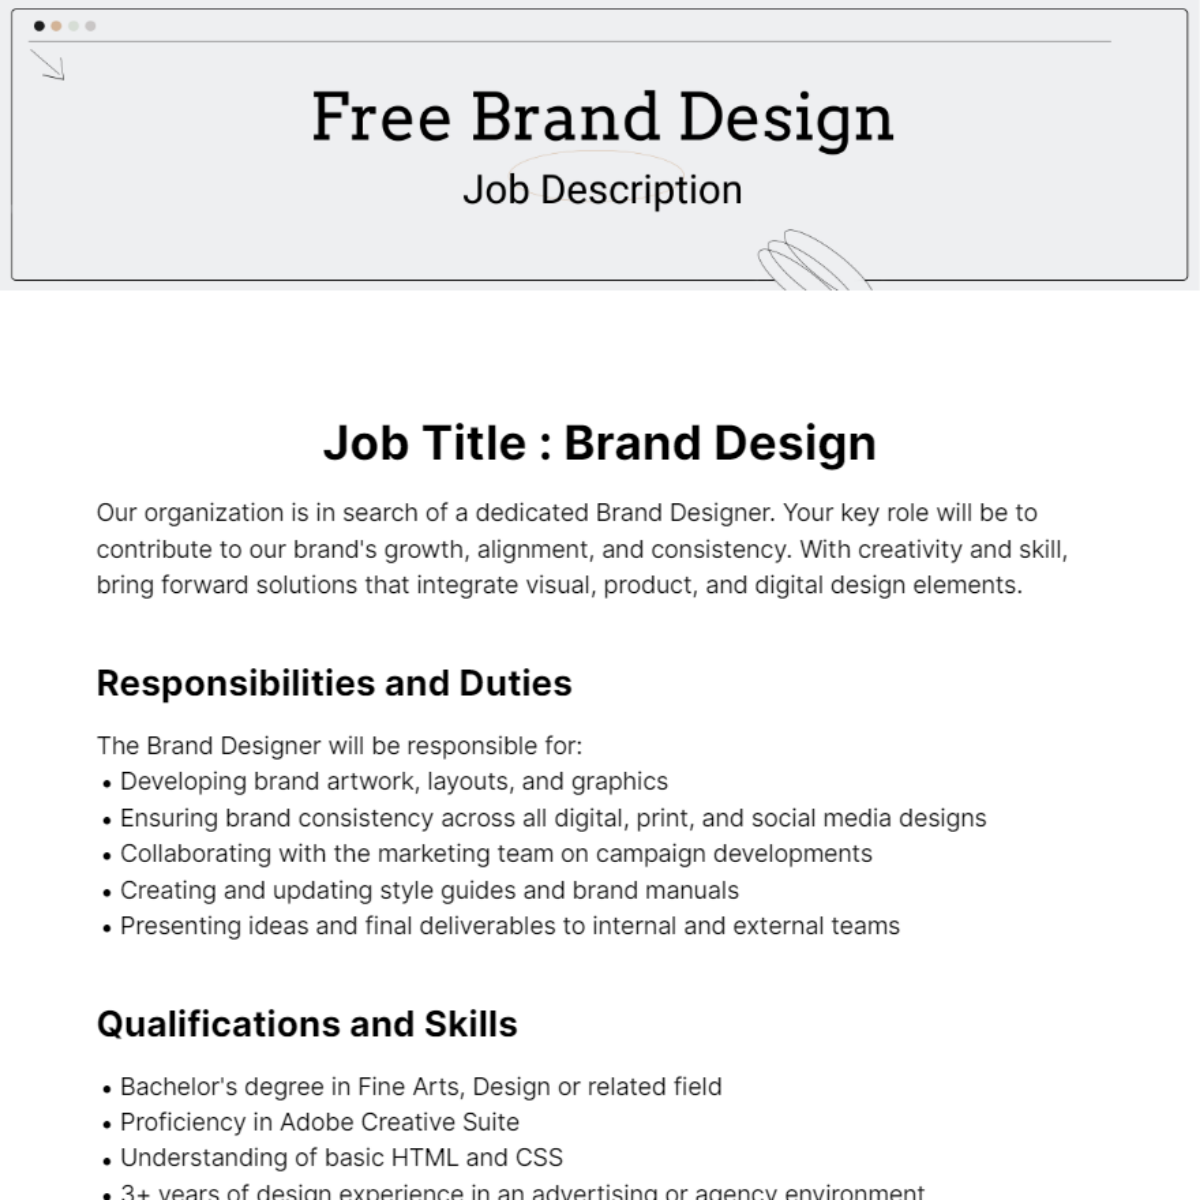 Free Brand Design Job Description Template